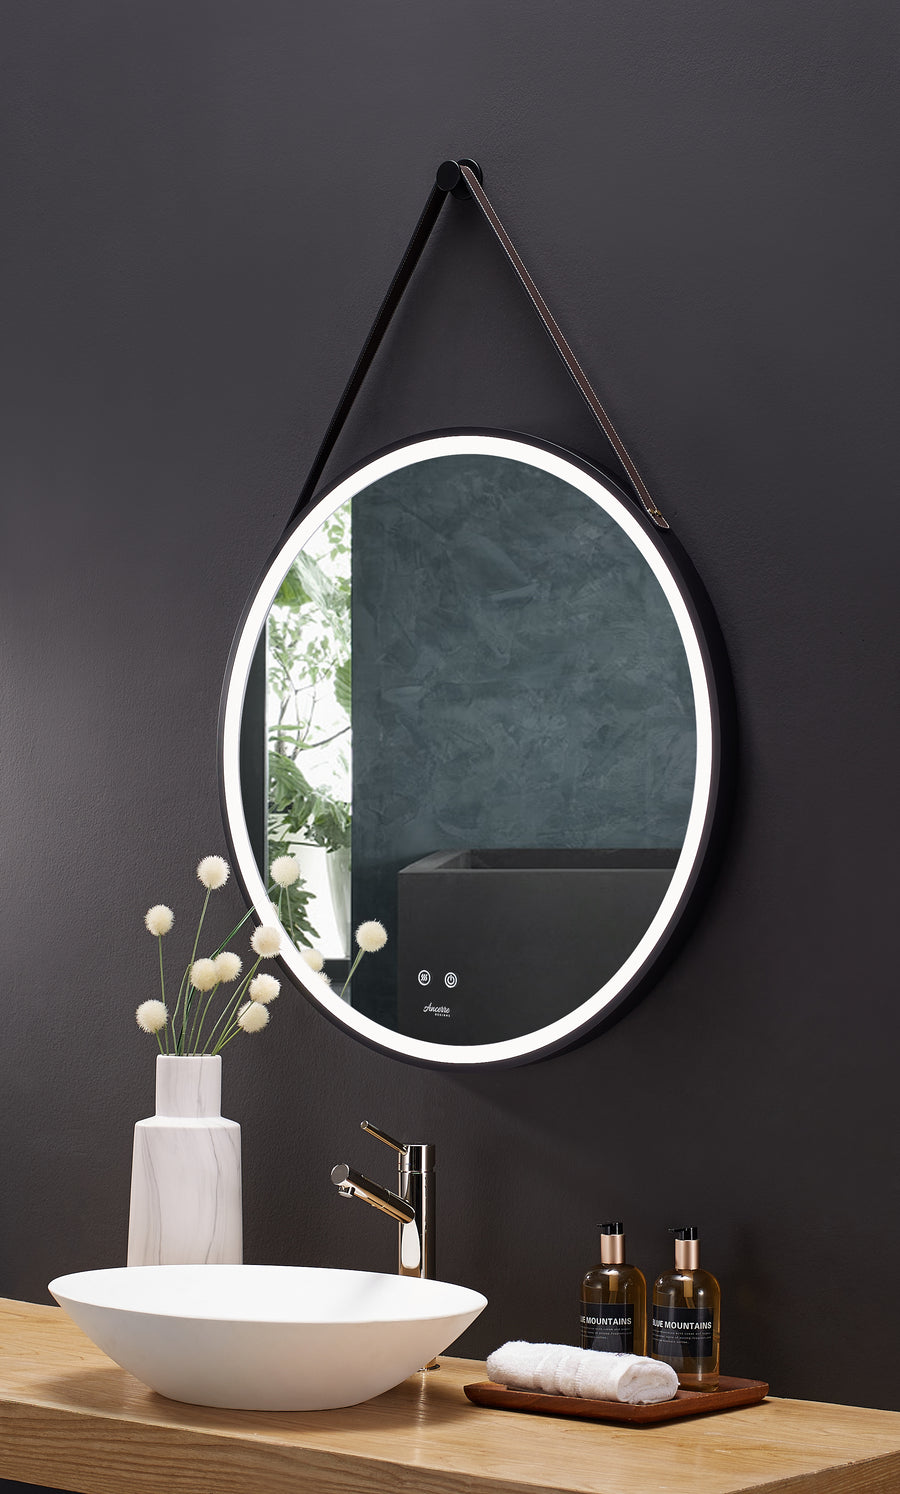 Sangle Round LED Mirror Black Framed Lighted Bathroom Vanity Mirror and Vegan Leather Strap - Ancerre Designs 24 inch.